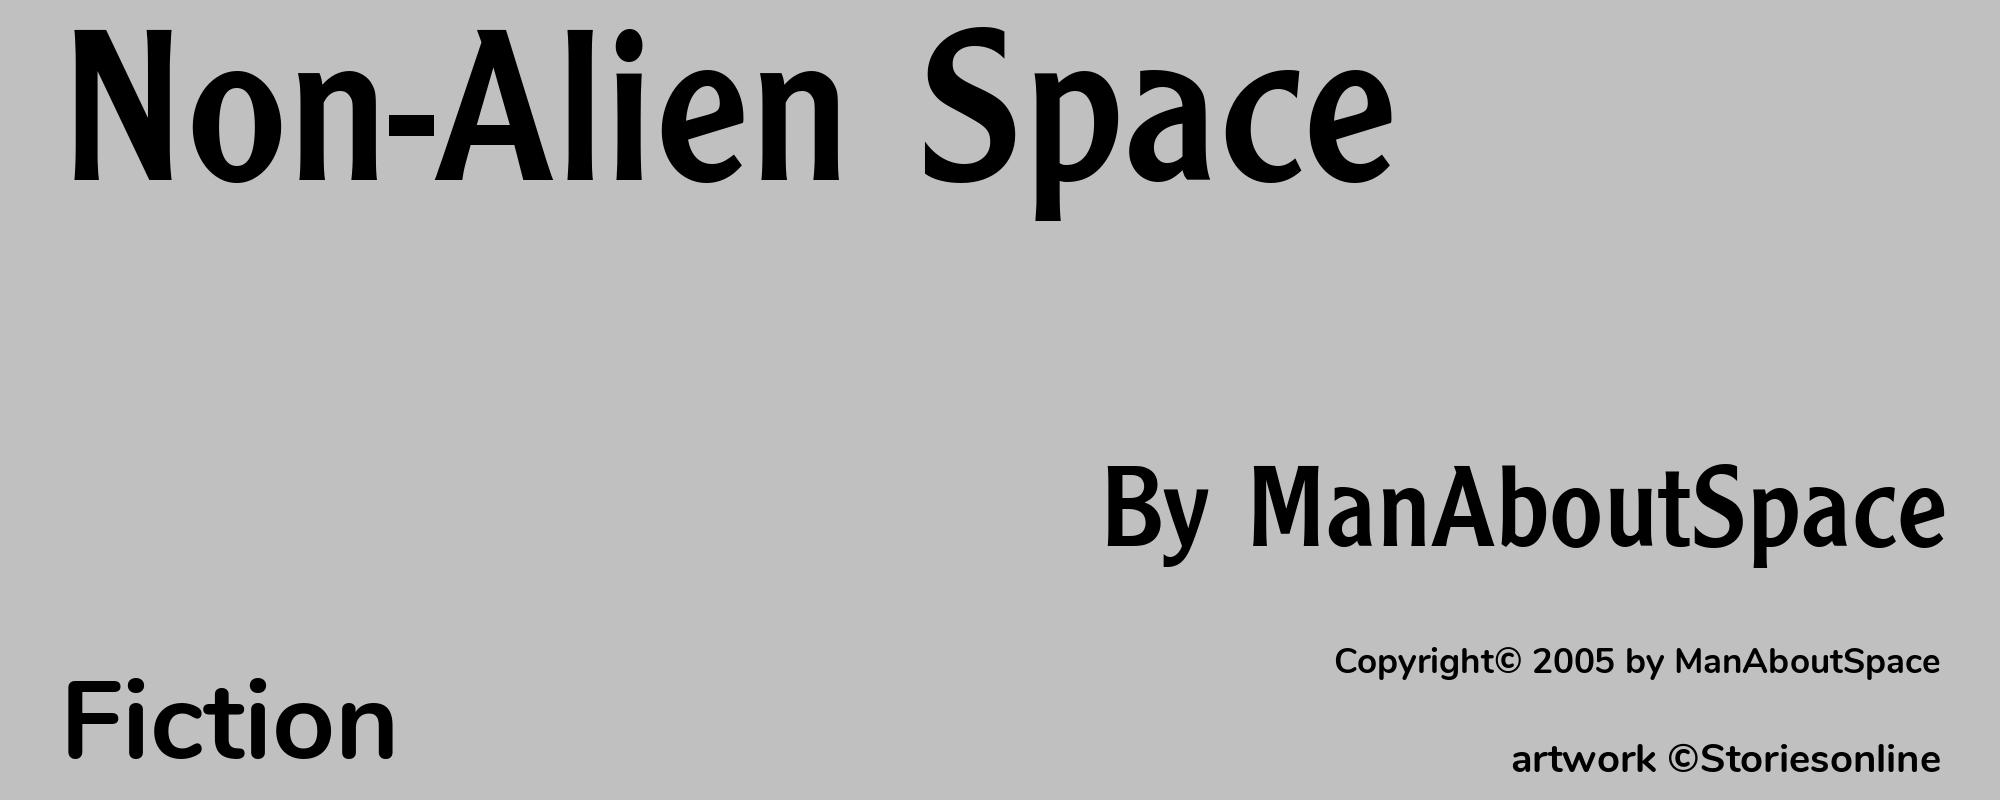 Non-Alien Space - Cover